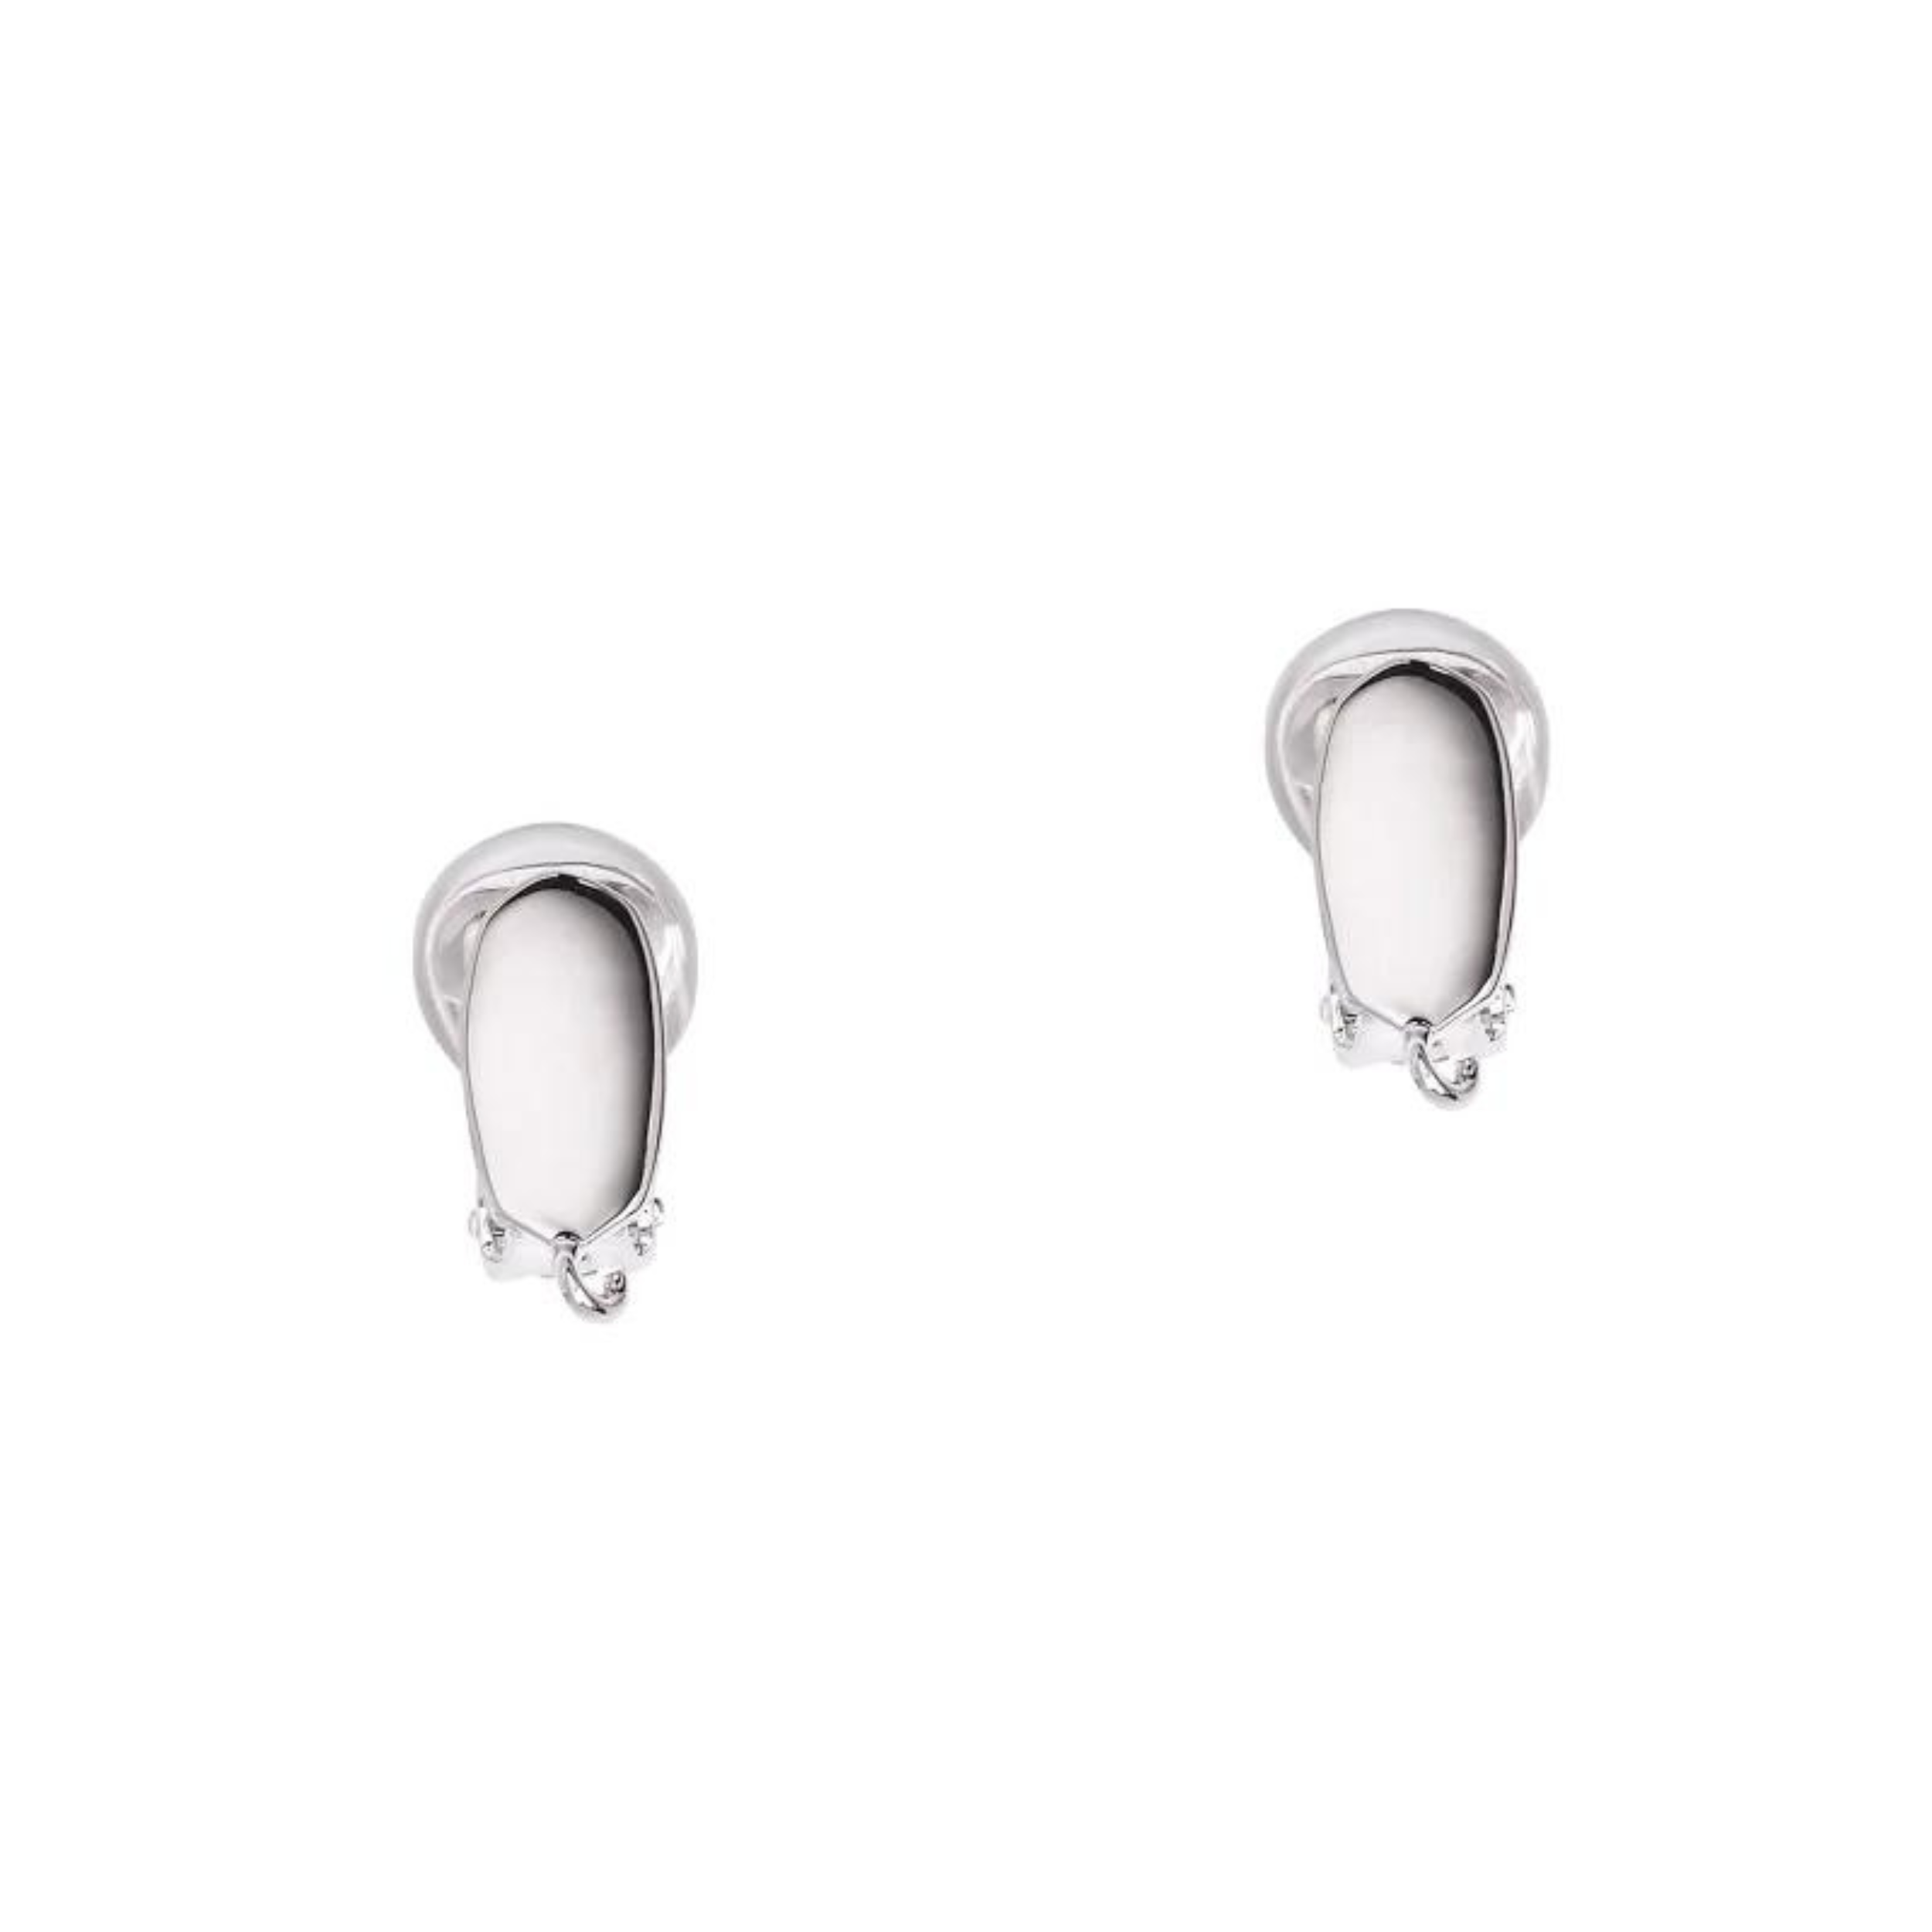 Silver clip on earring converter.